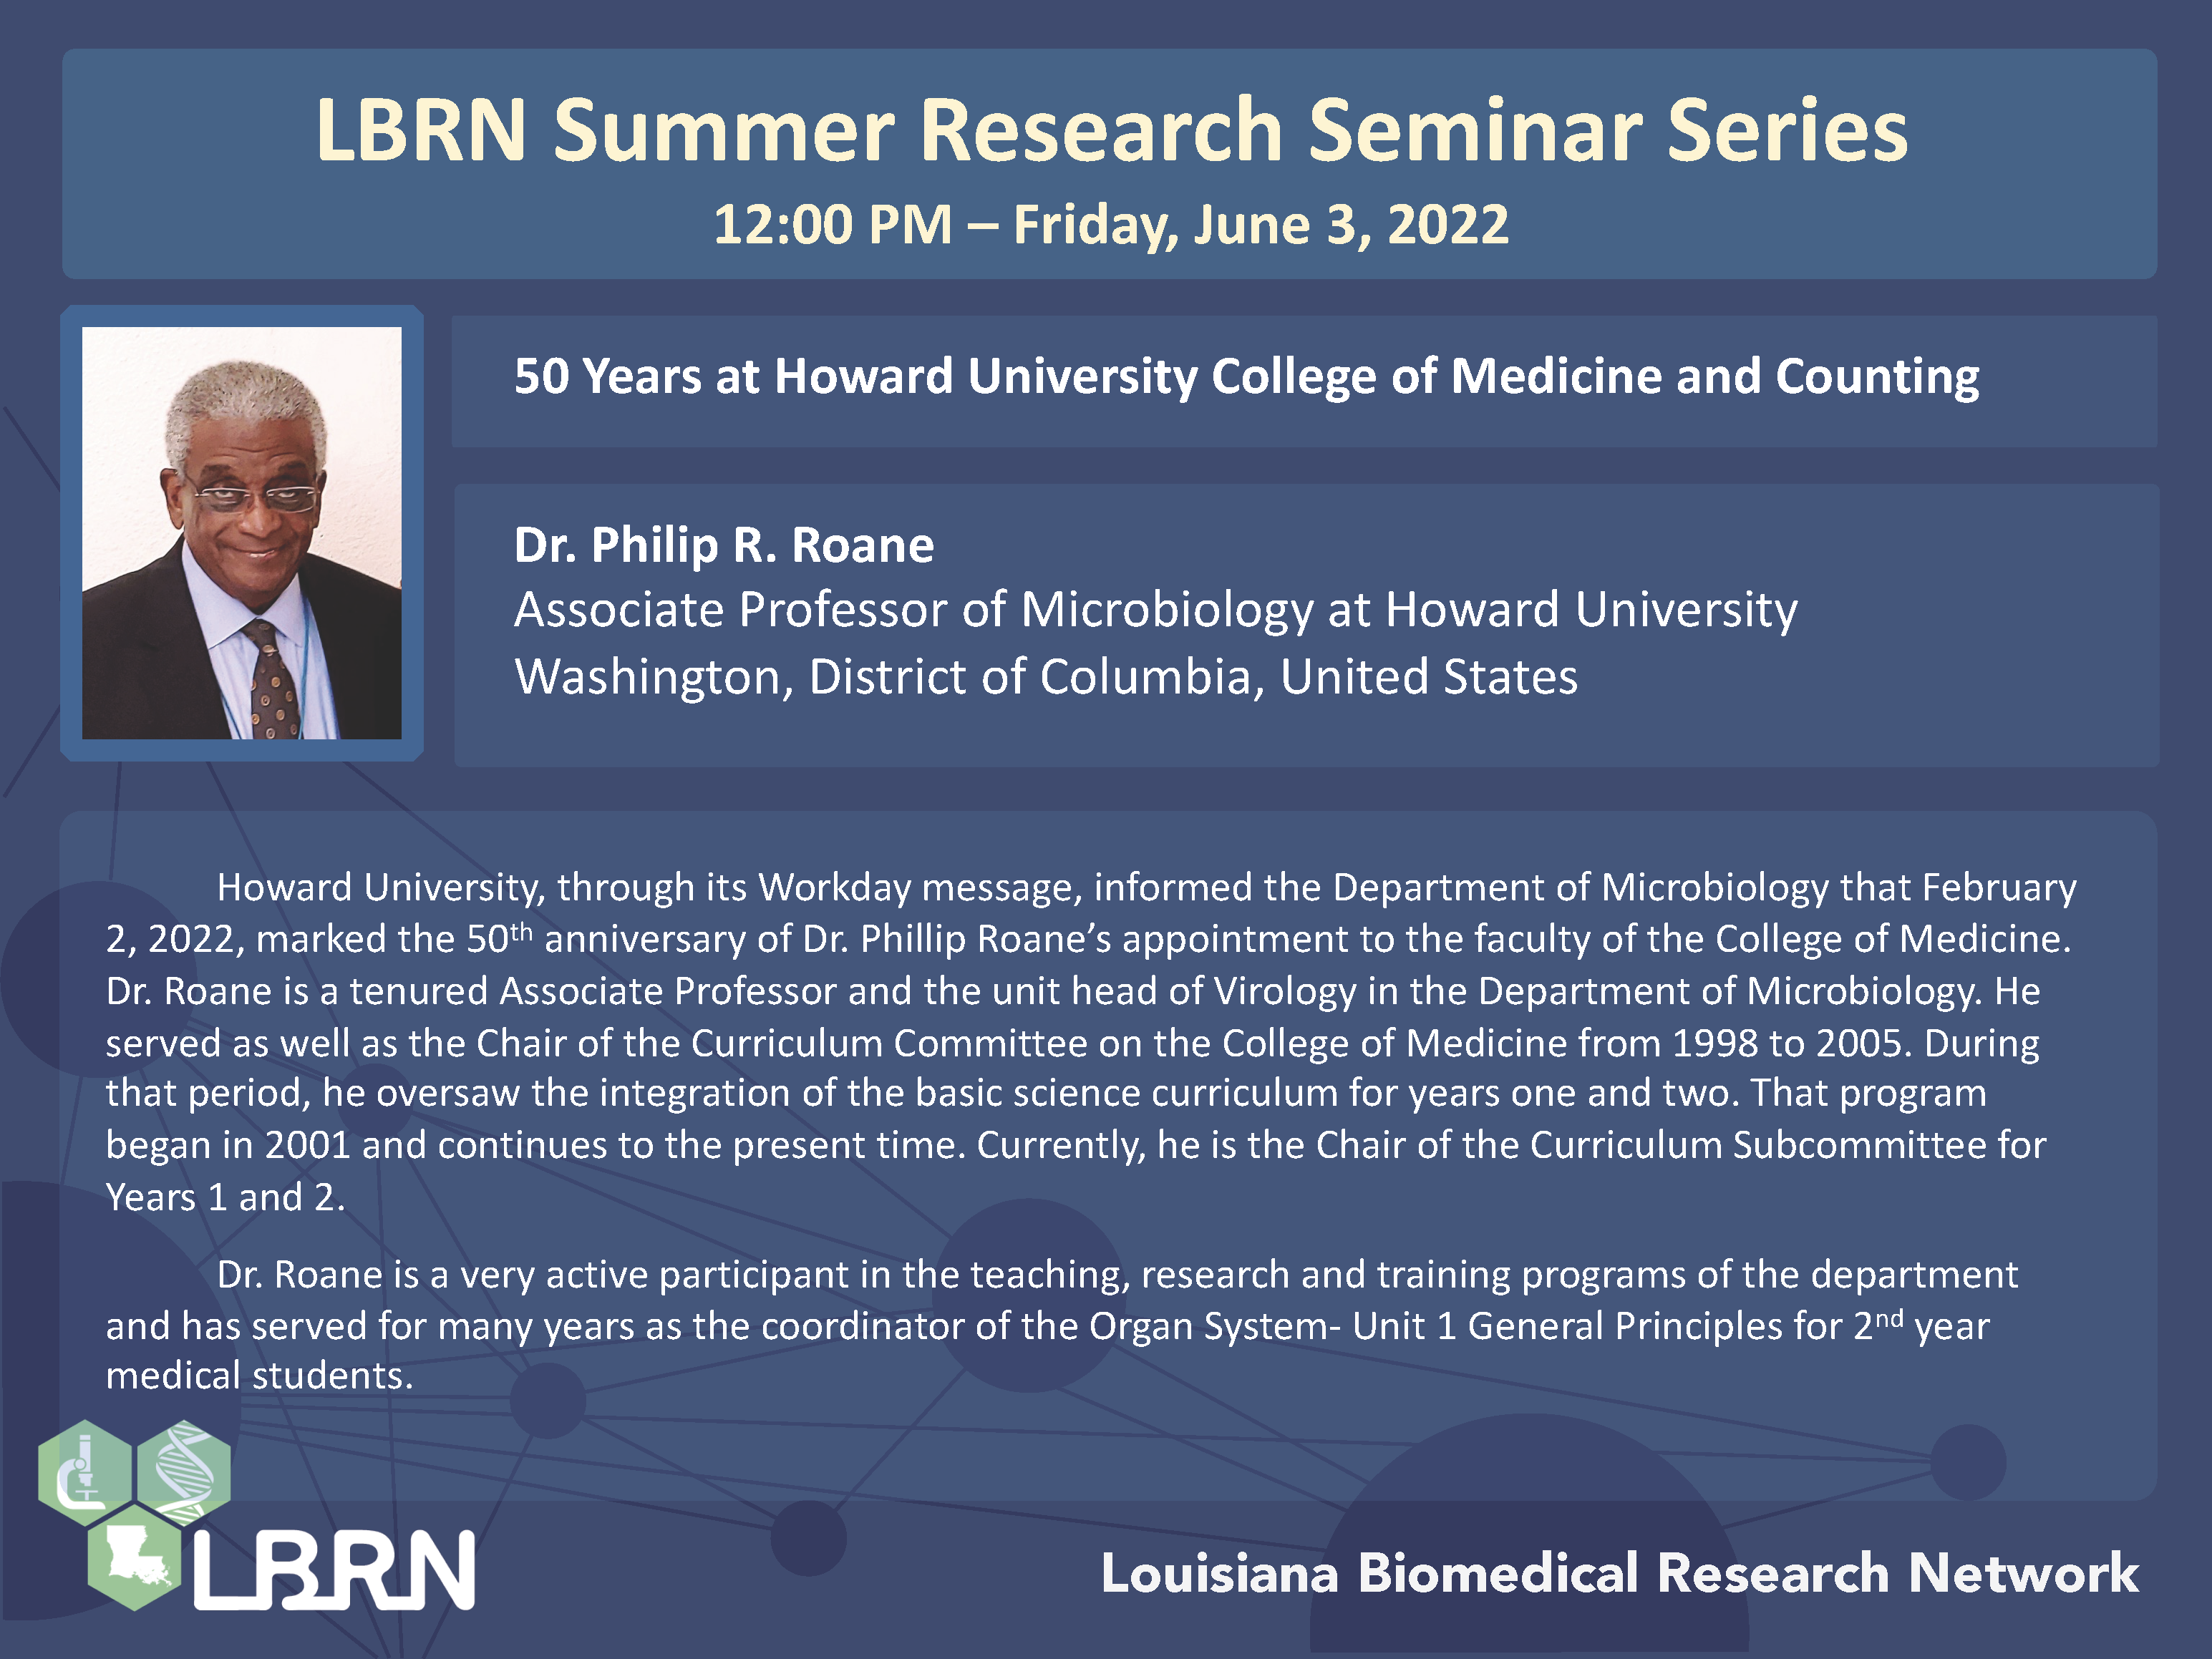 LBRN Summer Research Seminar Series - Dr. Philip R. Roane